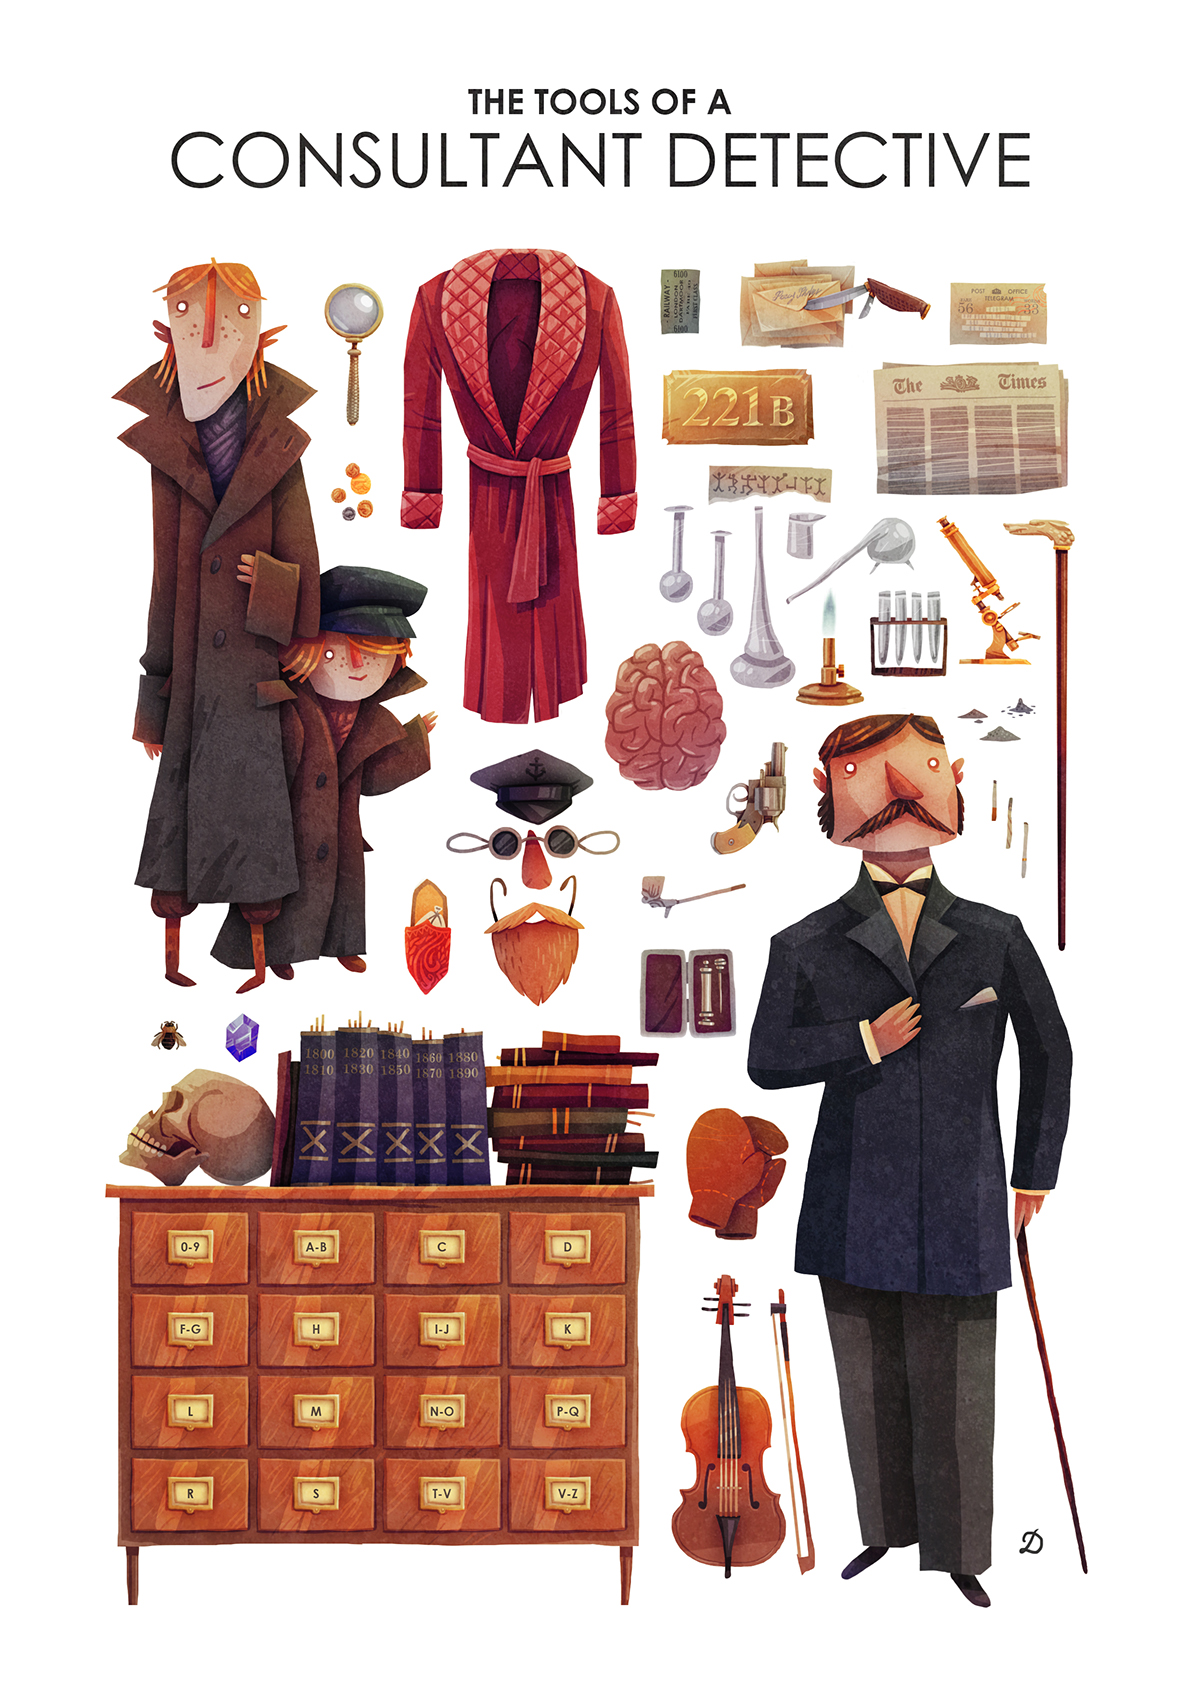 Sherlock Holmes  sherlock  holmes  watson Dr. Watson baker street  Irregulars 221b conan doyle Consultant detective  detective  victorian Items